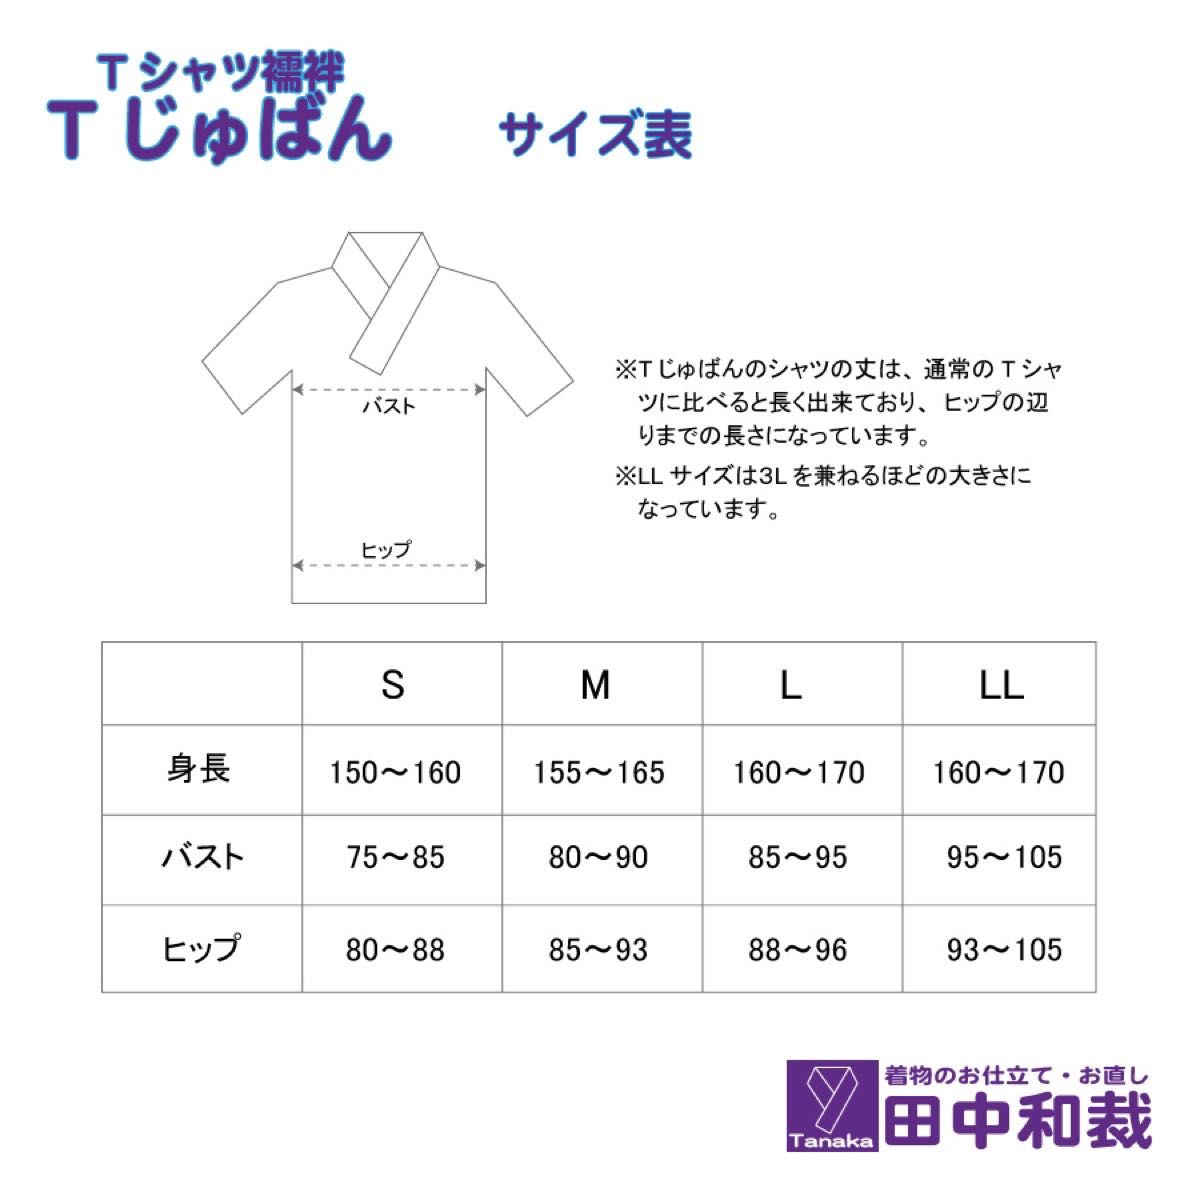 Tシャツ襦袢 「Tじゅばん 衣紋抜き+」半襦袢、女性用、衣紋抜き付き